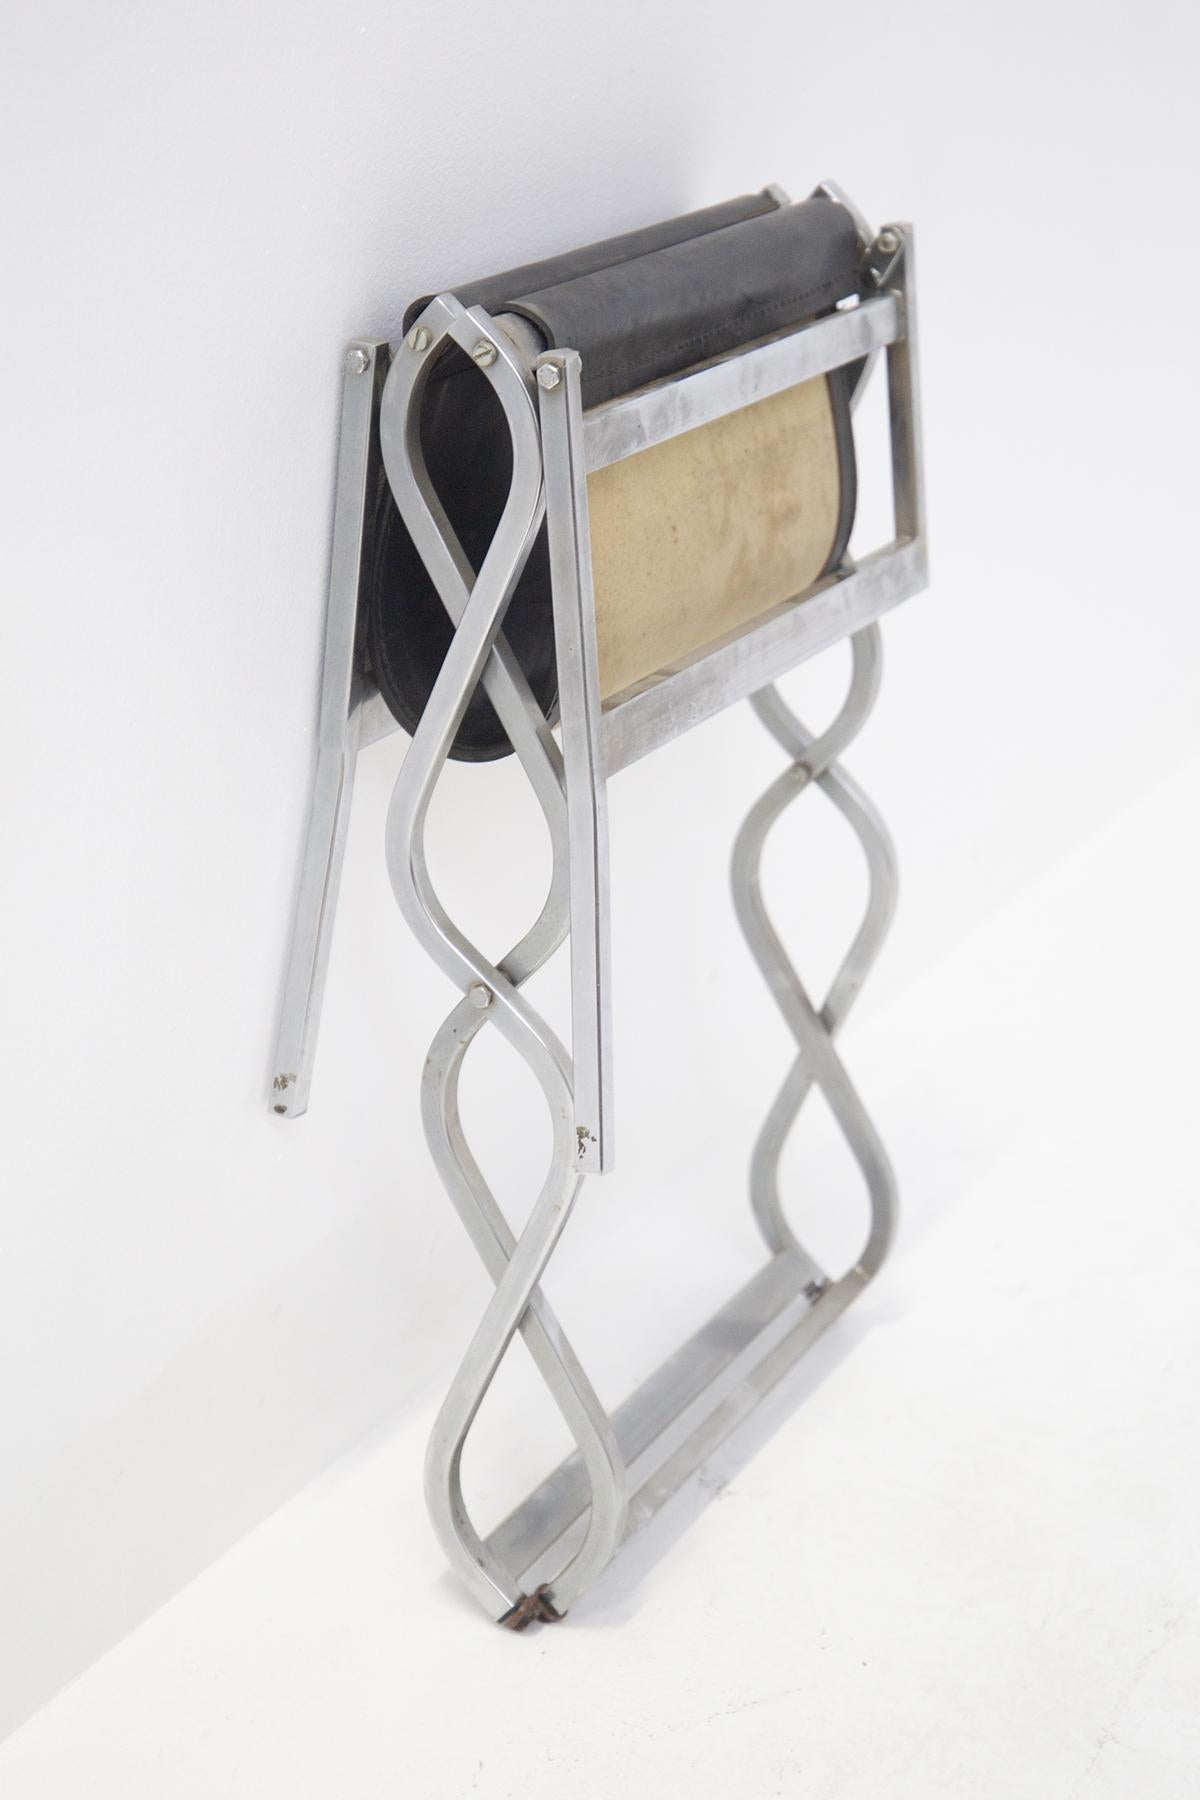 Steel Luigi Caccia Dominioni Vintage Folding Chairs for Vips Residence Milano